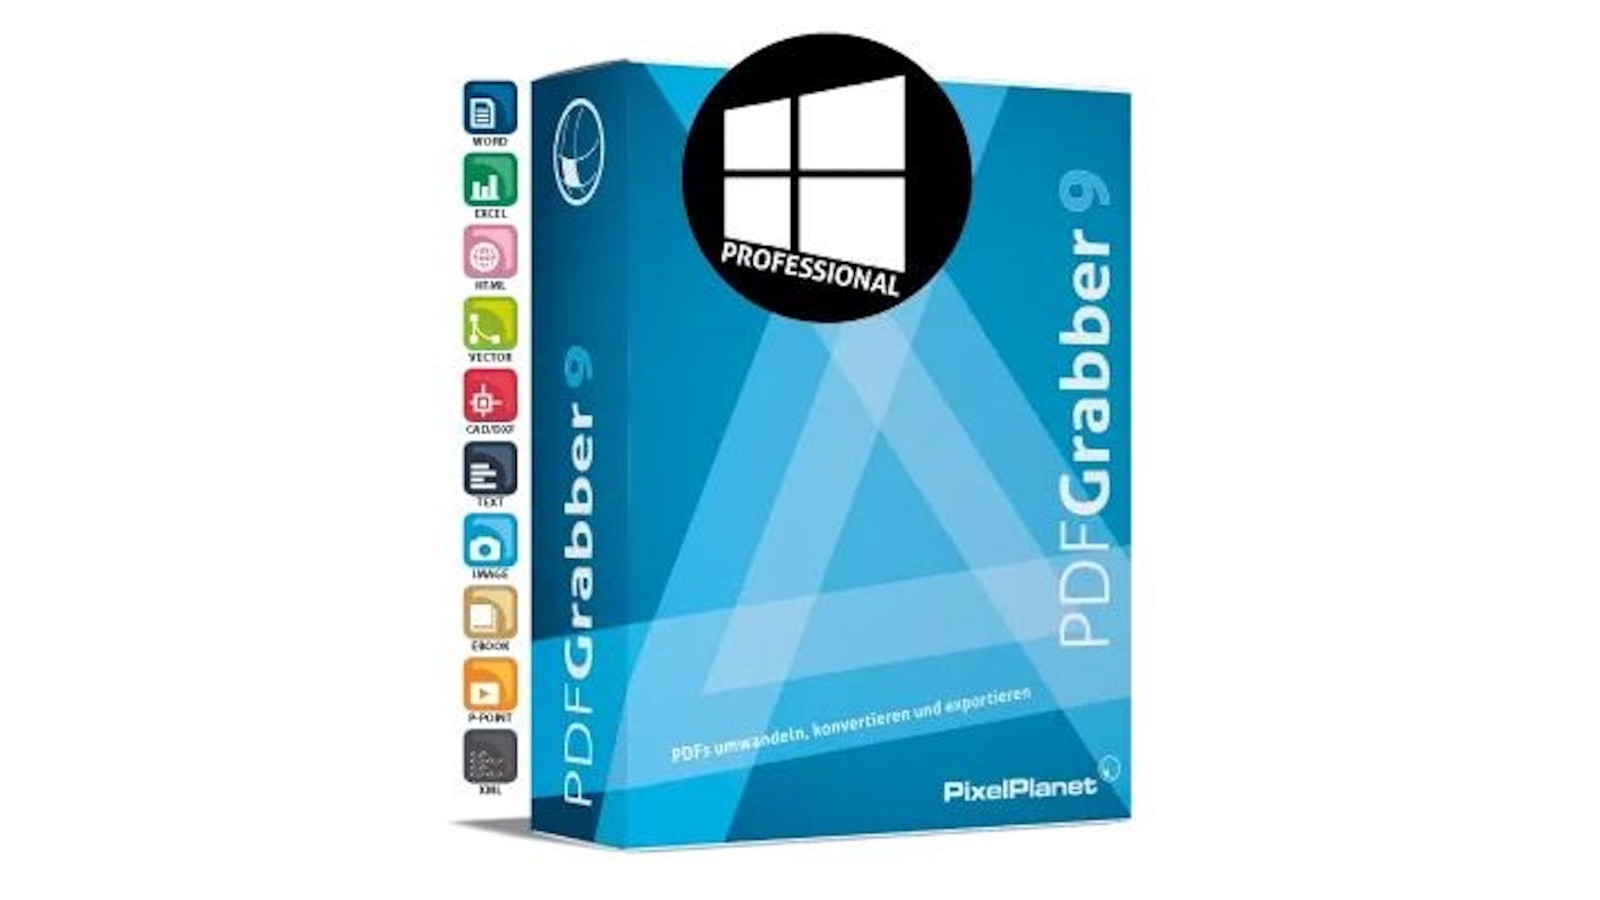 PixelPlanet PdfGrabber 9 Professional Network Licence Key (Lifetime / 5 Users), 7.74 usd